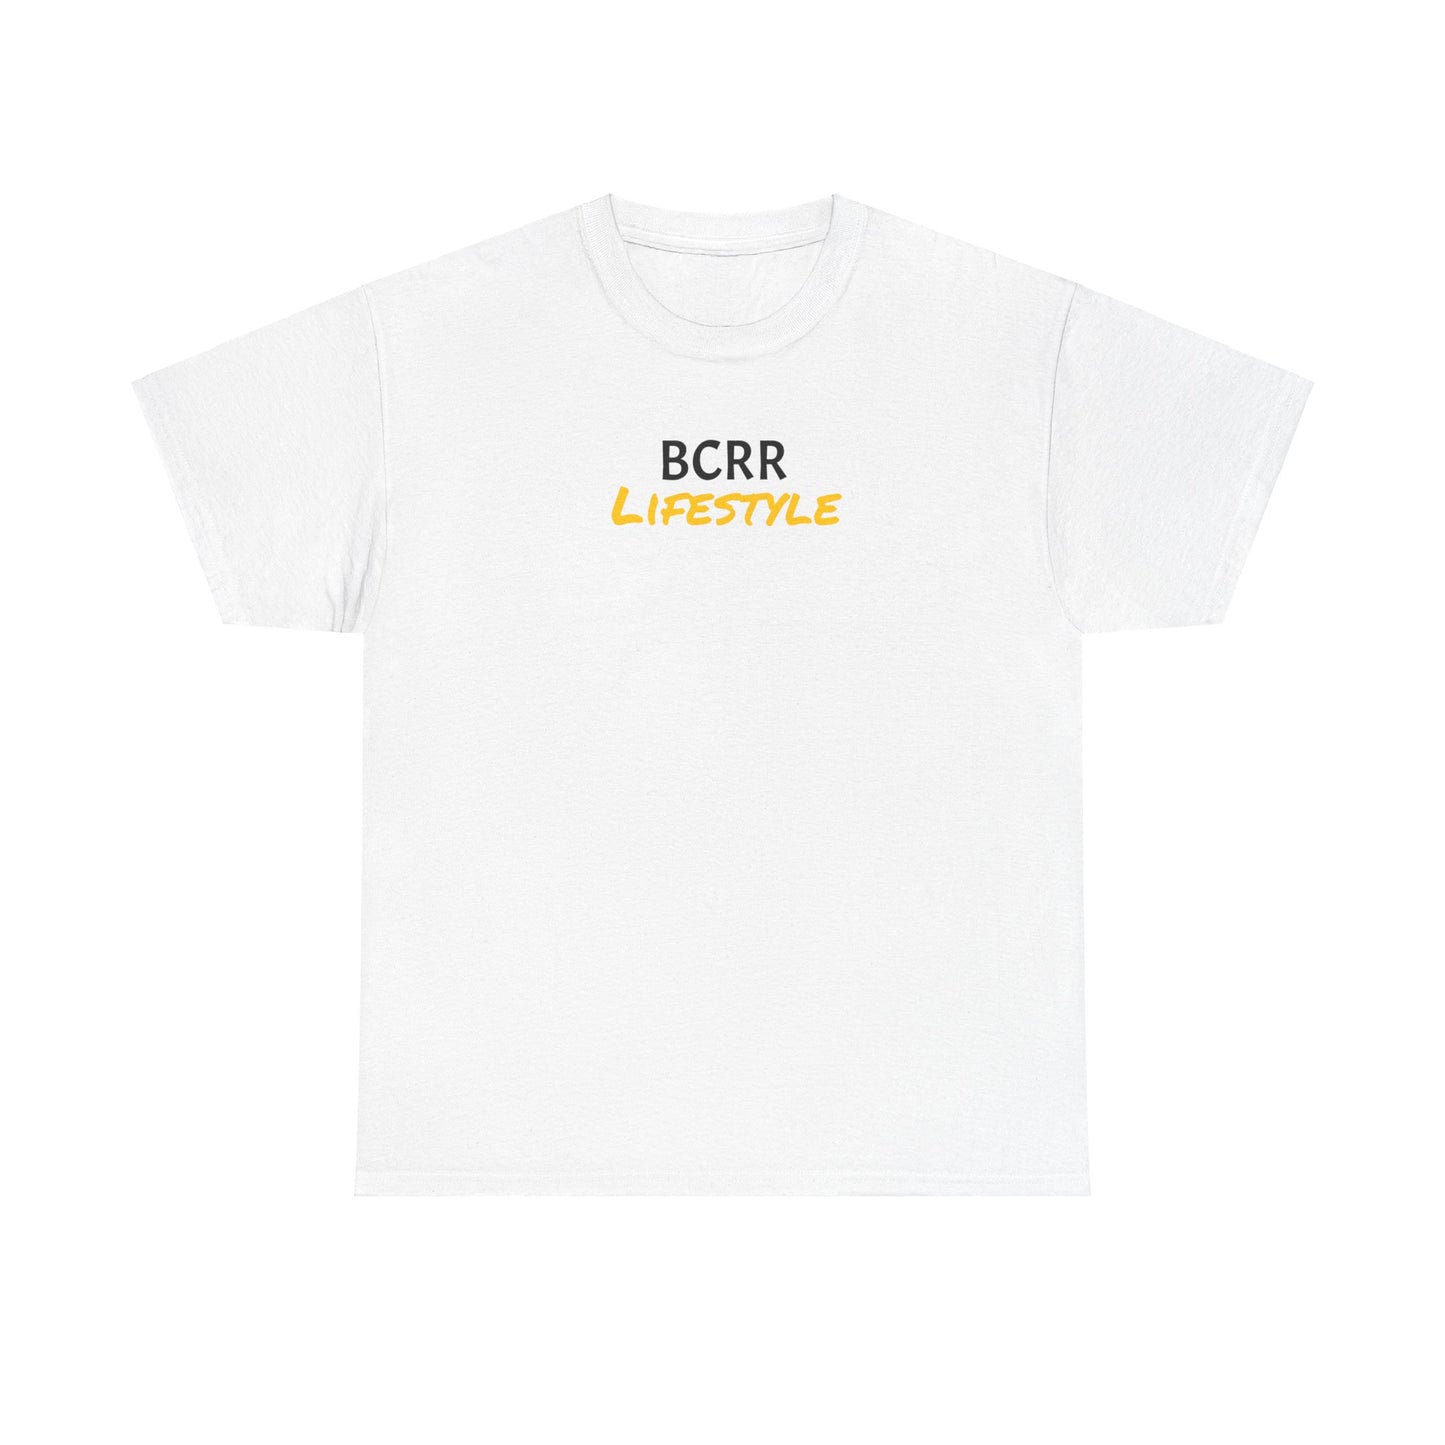 BCRR Lifestyle Official T-Shirt